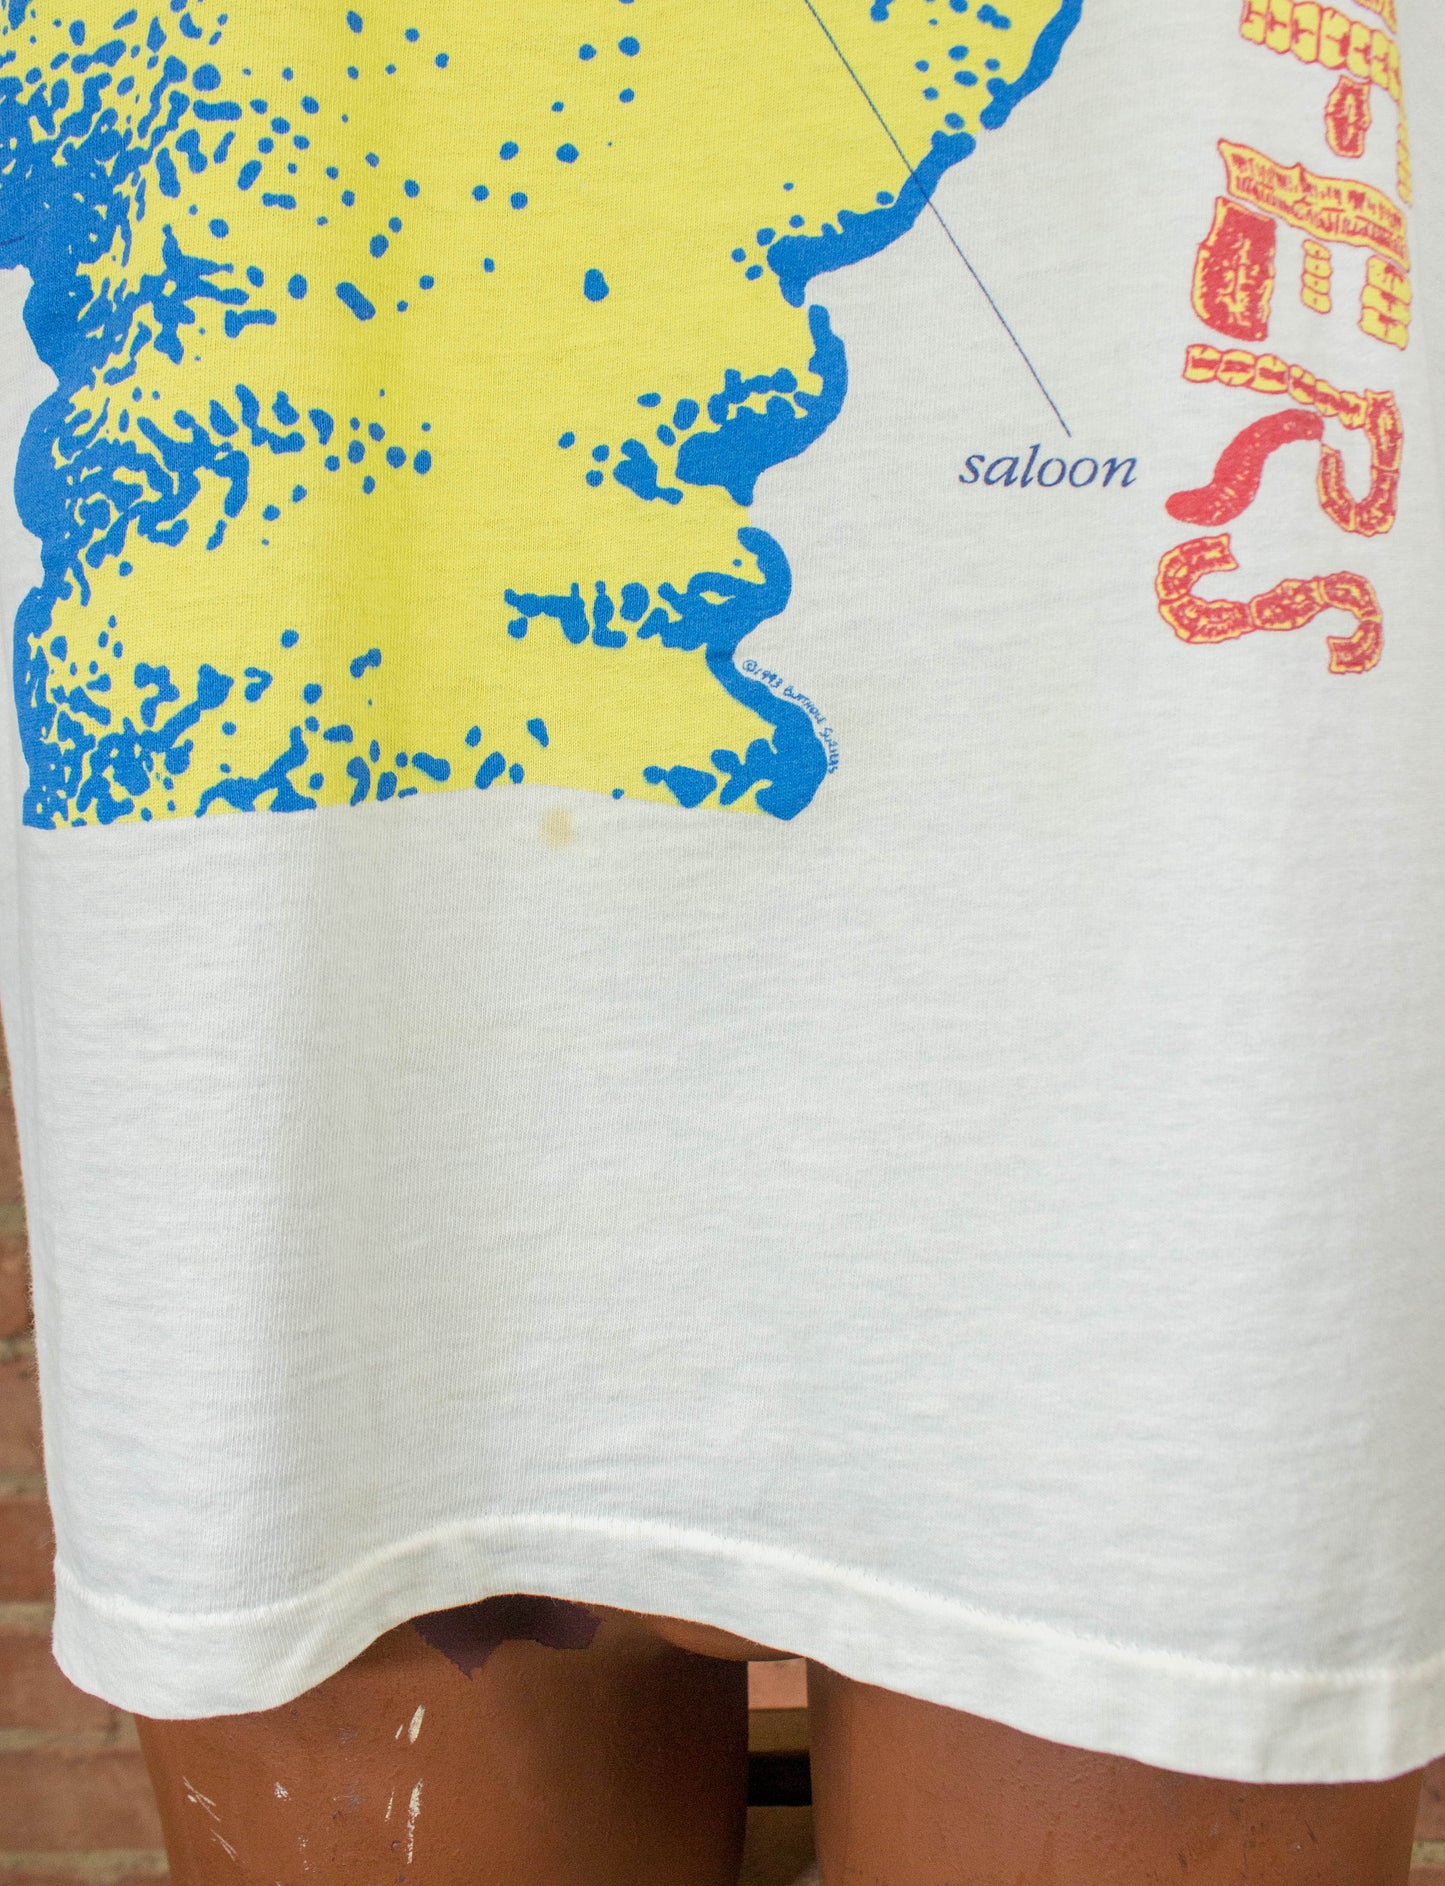 Butthole Surfers 1993 Independent Worm Saloon Tour White Concert T Shirt Unisex XL